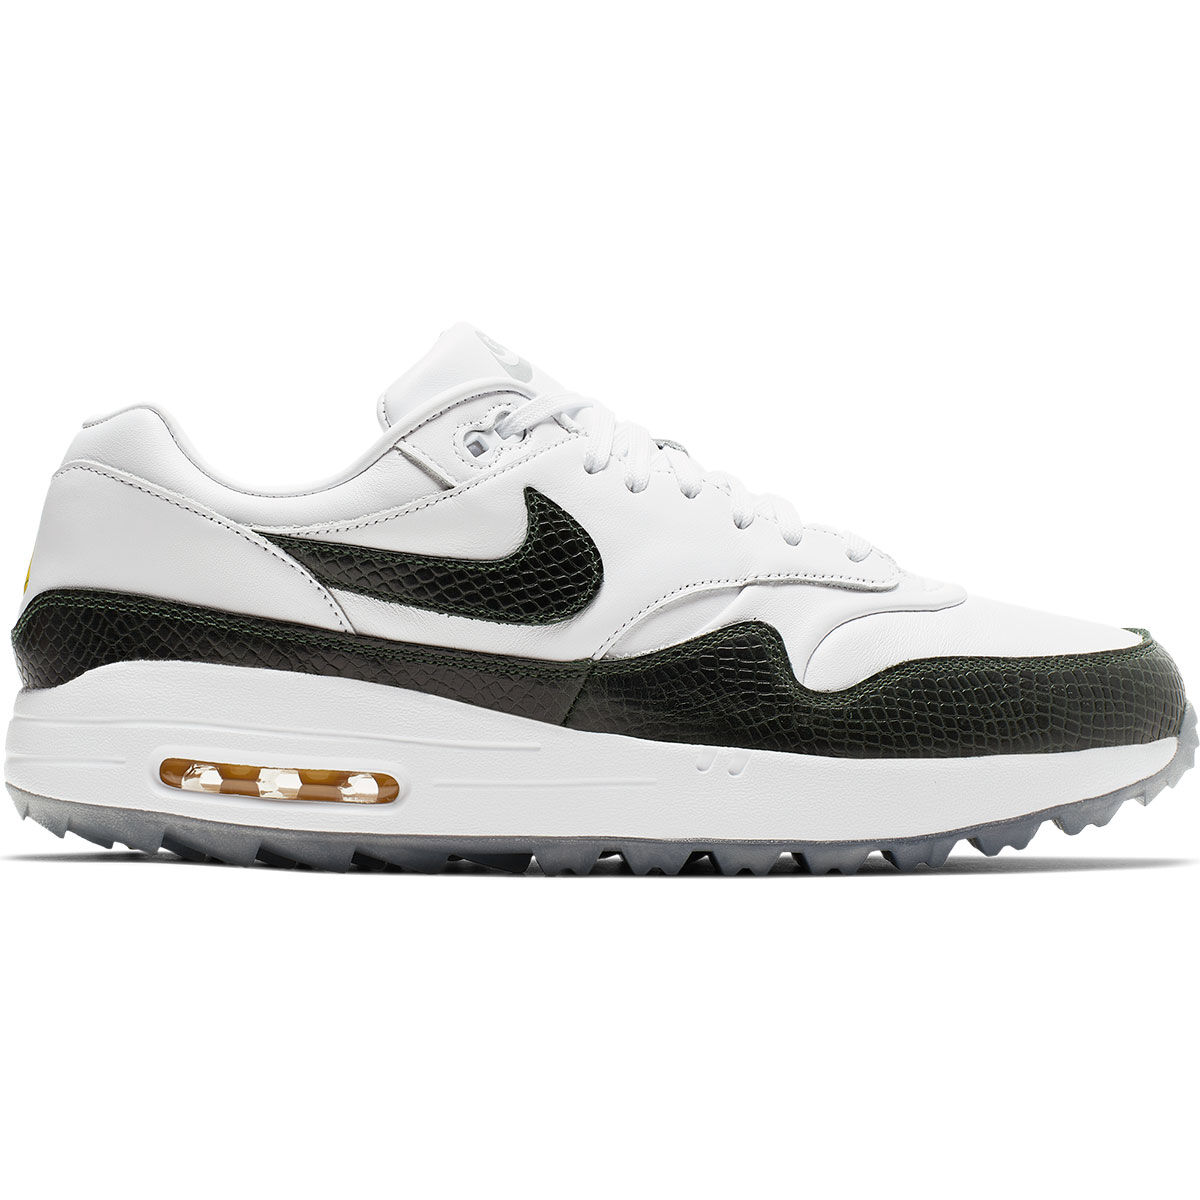 The Nike Golf Air Max 1G NRG Shoes | Online Golf